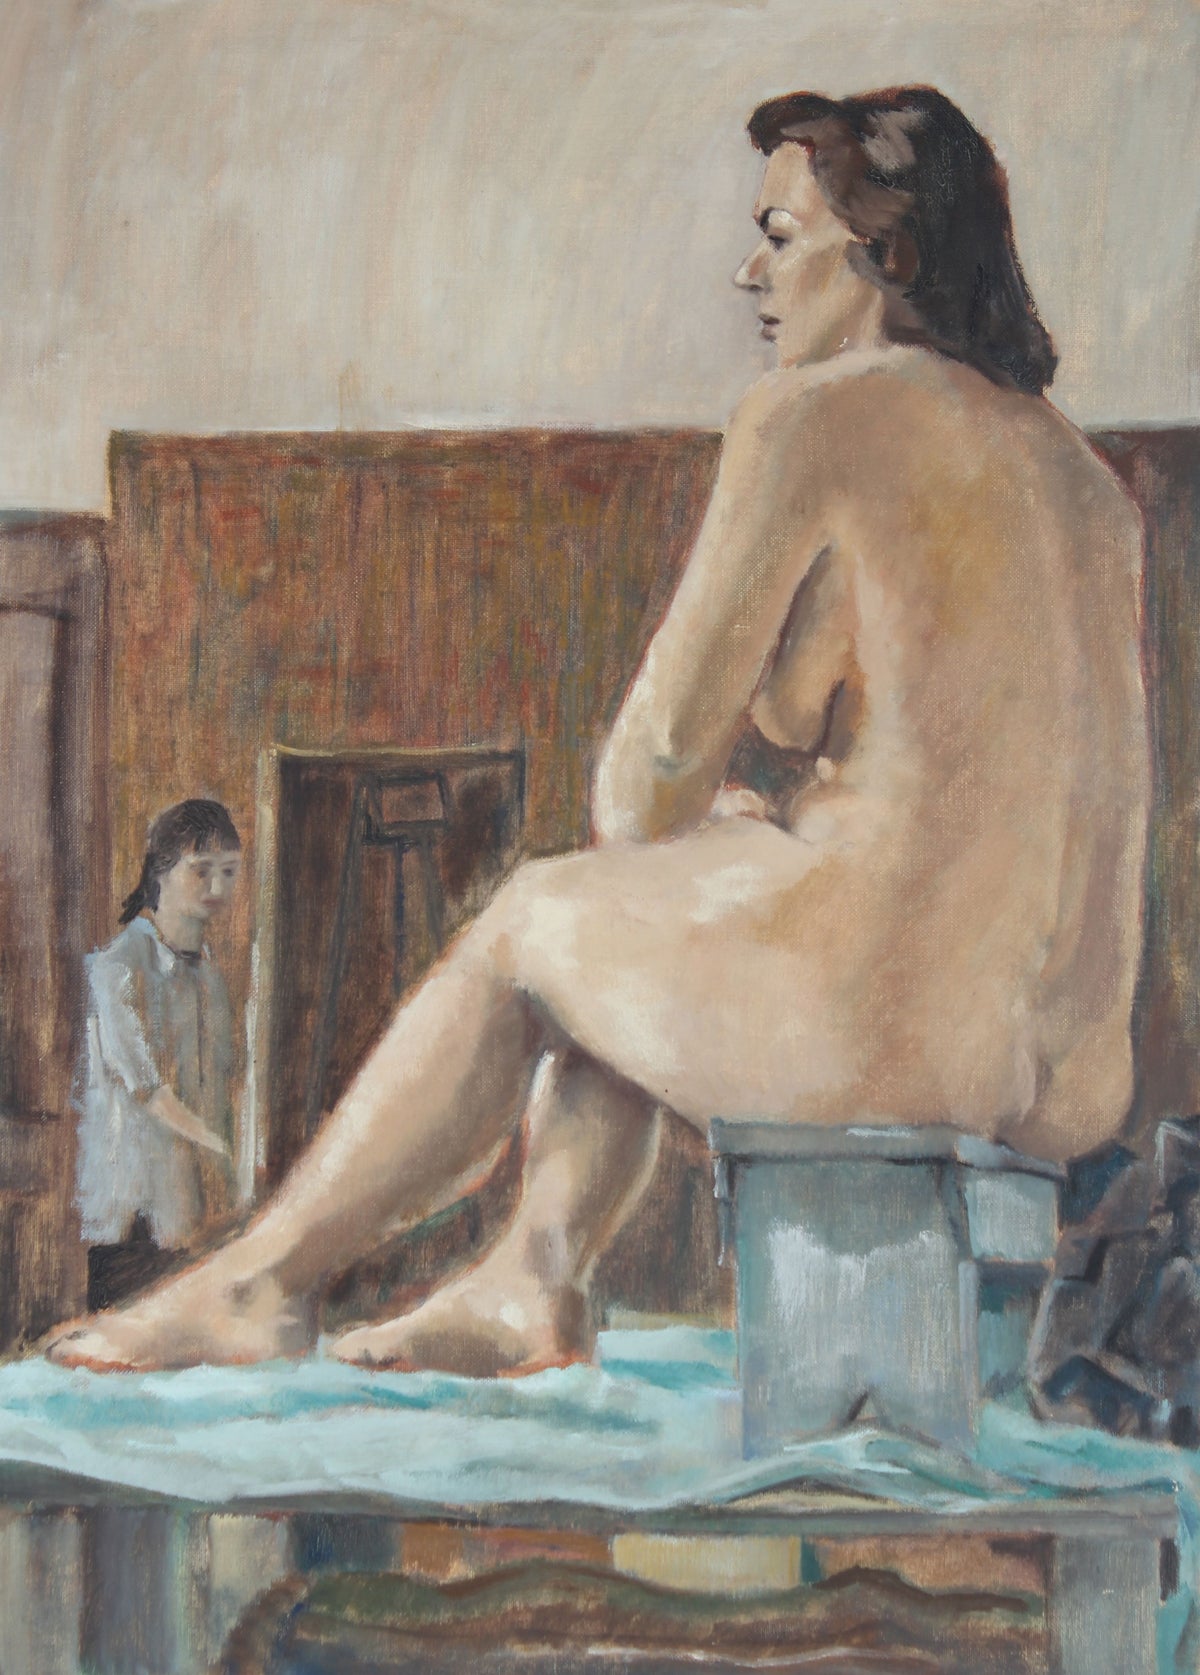 Seated Nude Model, Rome&lt;br&gt;1957 Oil&lt;br&gt;&lt;br&gt;#30940